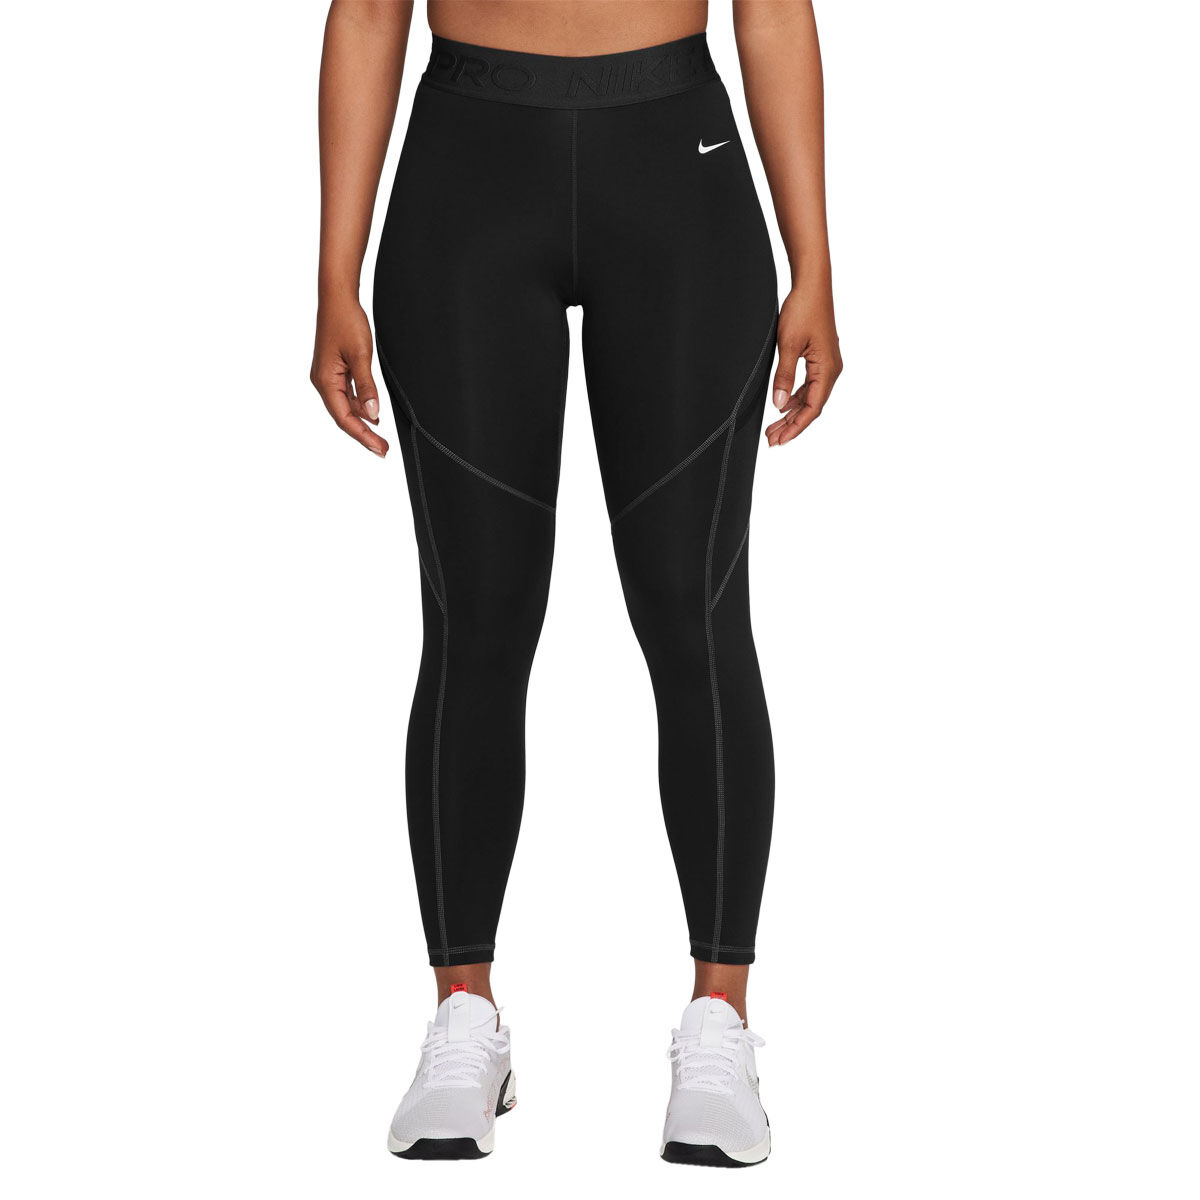 NWT Nike 7/8 length Tight Fit Leggings xs  Workout leggings, Clothes  design, Fashion